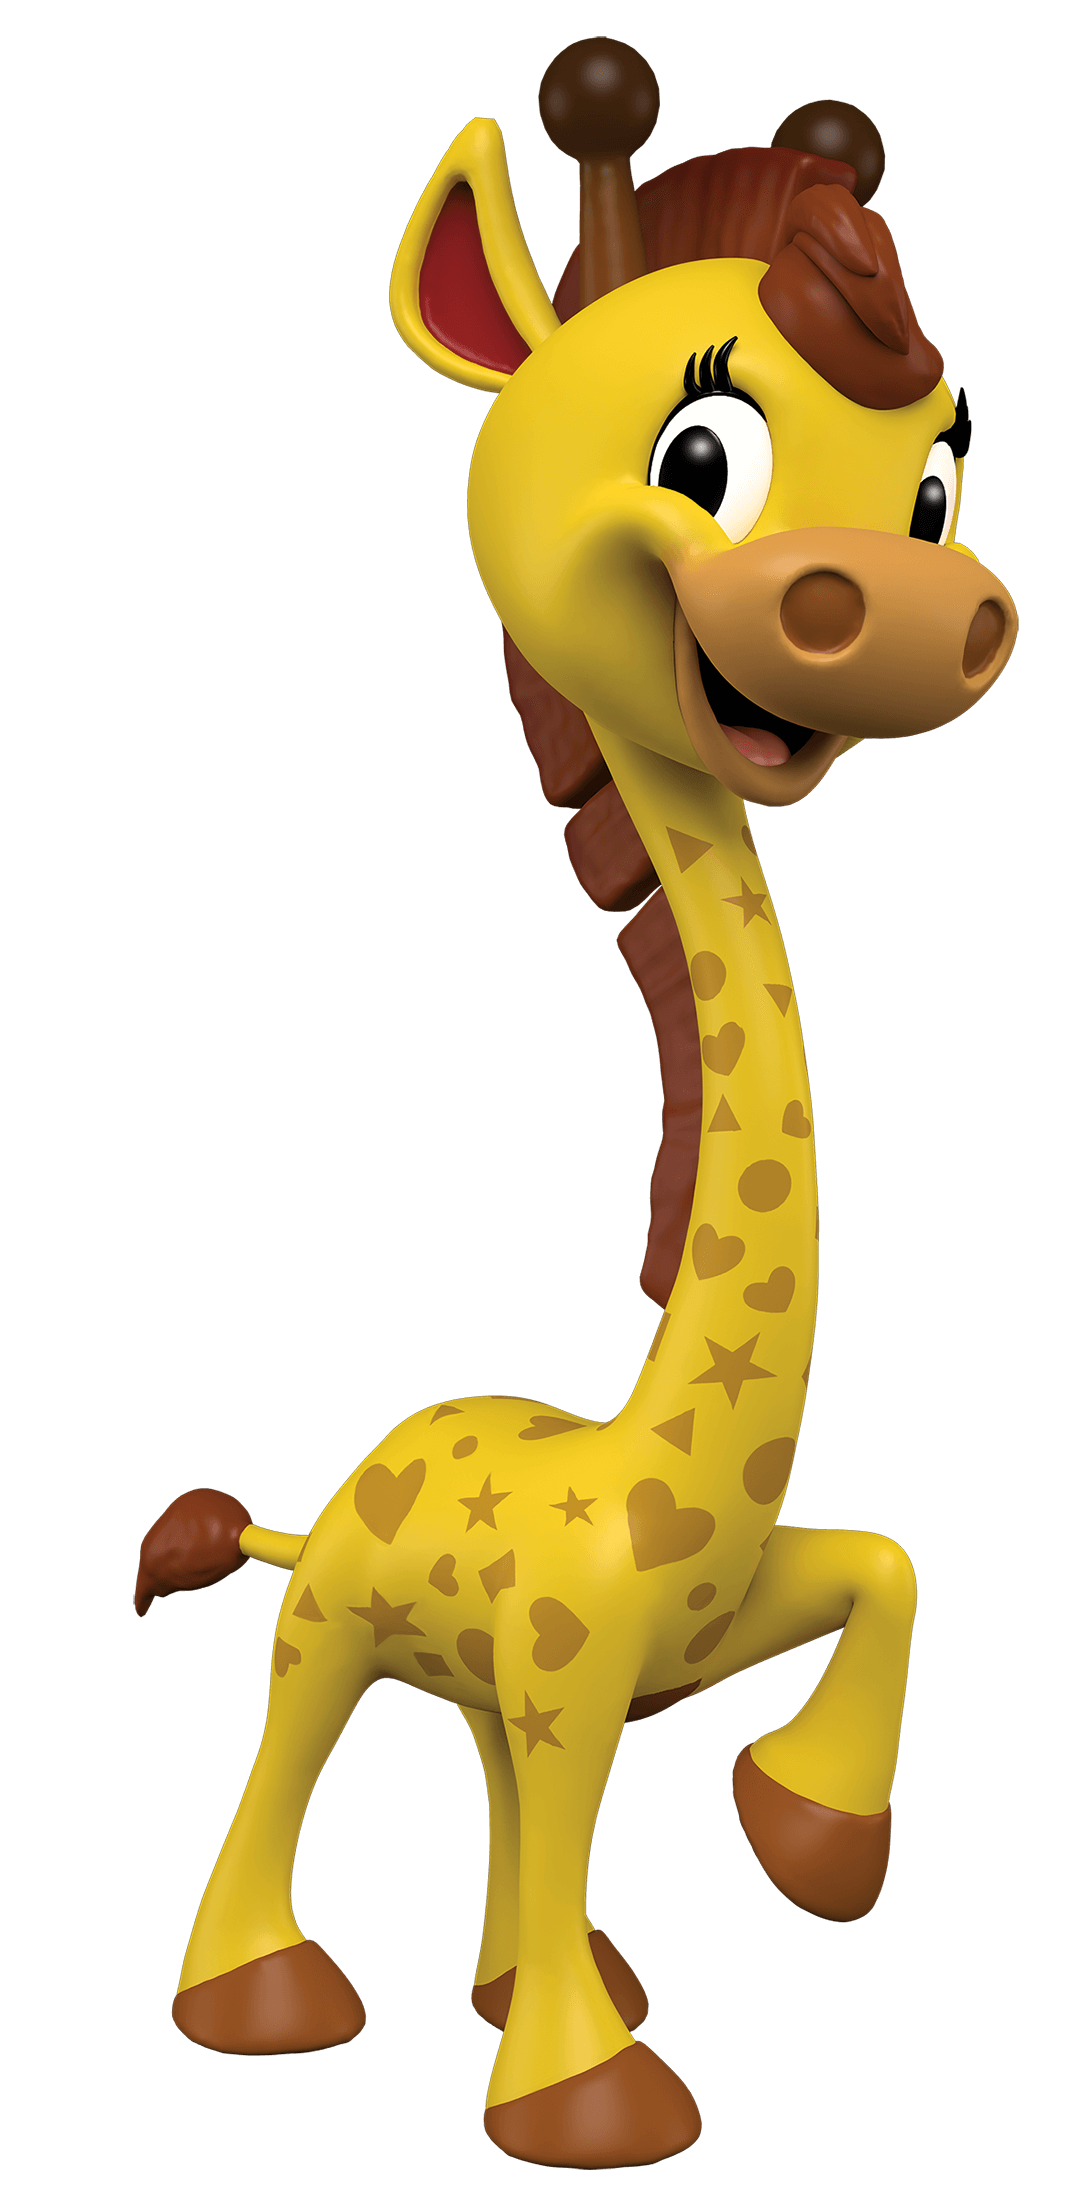 Image of a Giraffe